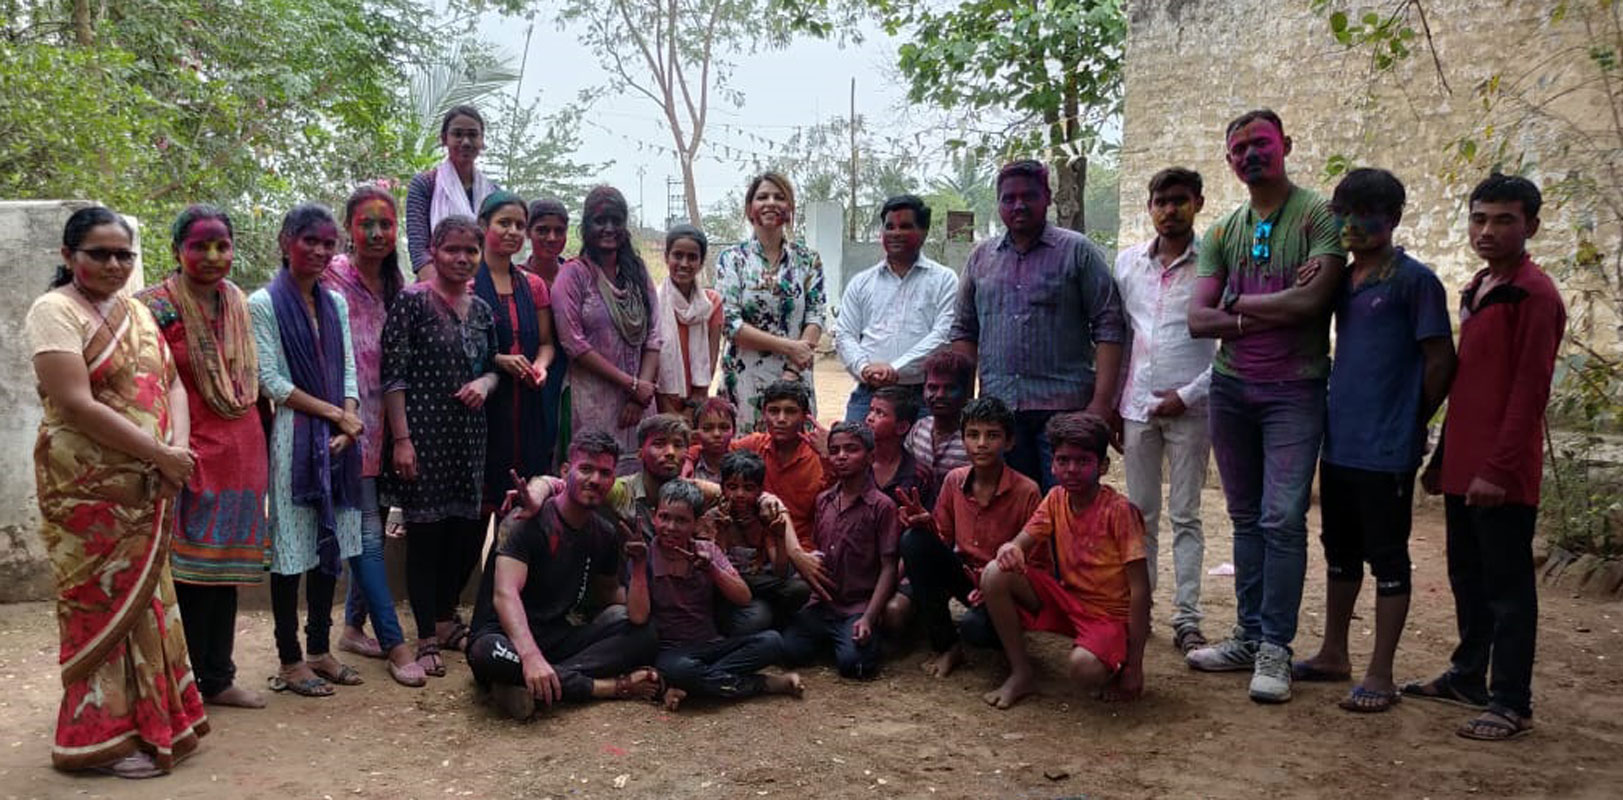 Rotaractors at the Prathana Balagram during Holi celebrations.